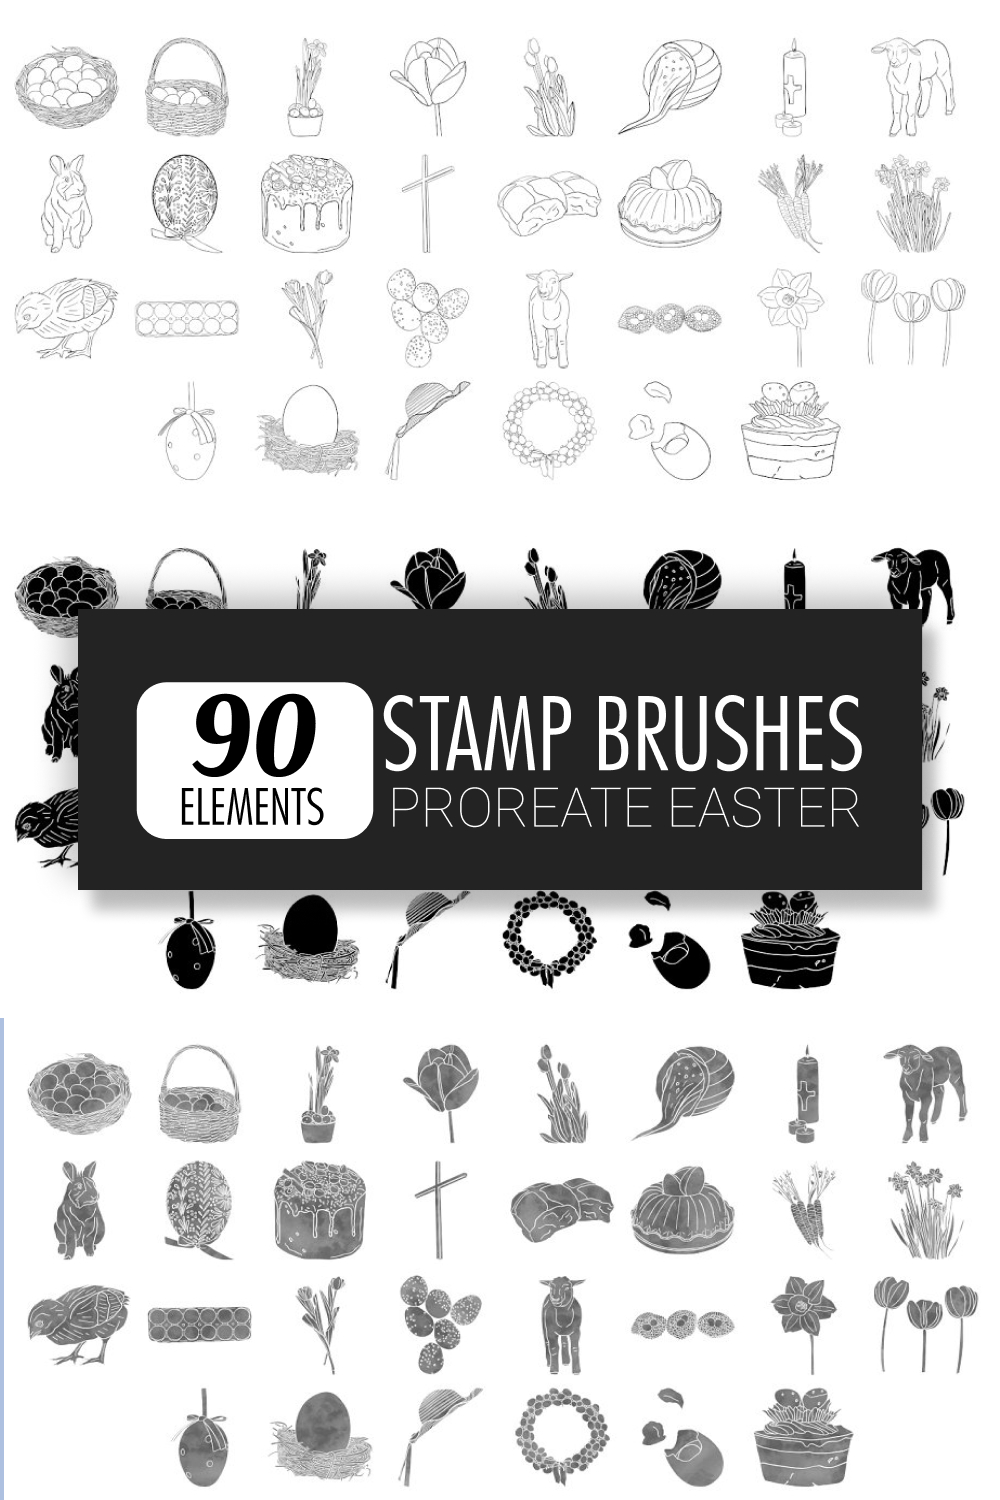 procreate easter stamp brushes pinterest 303